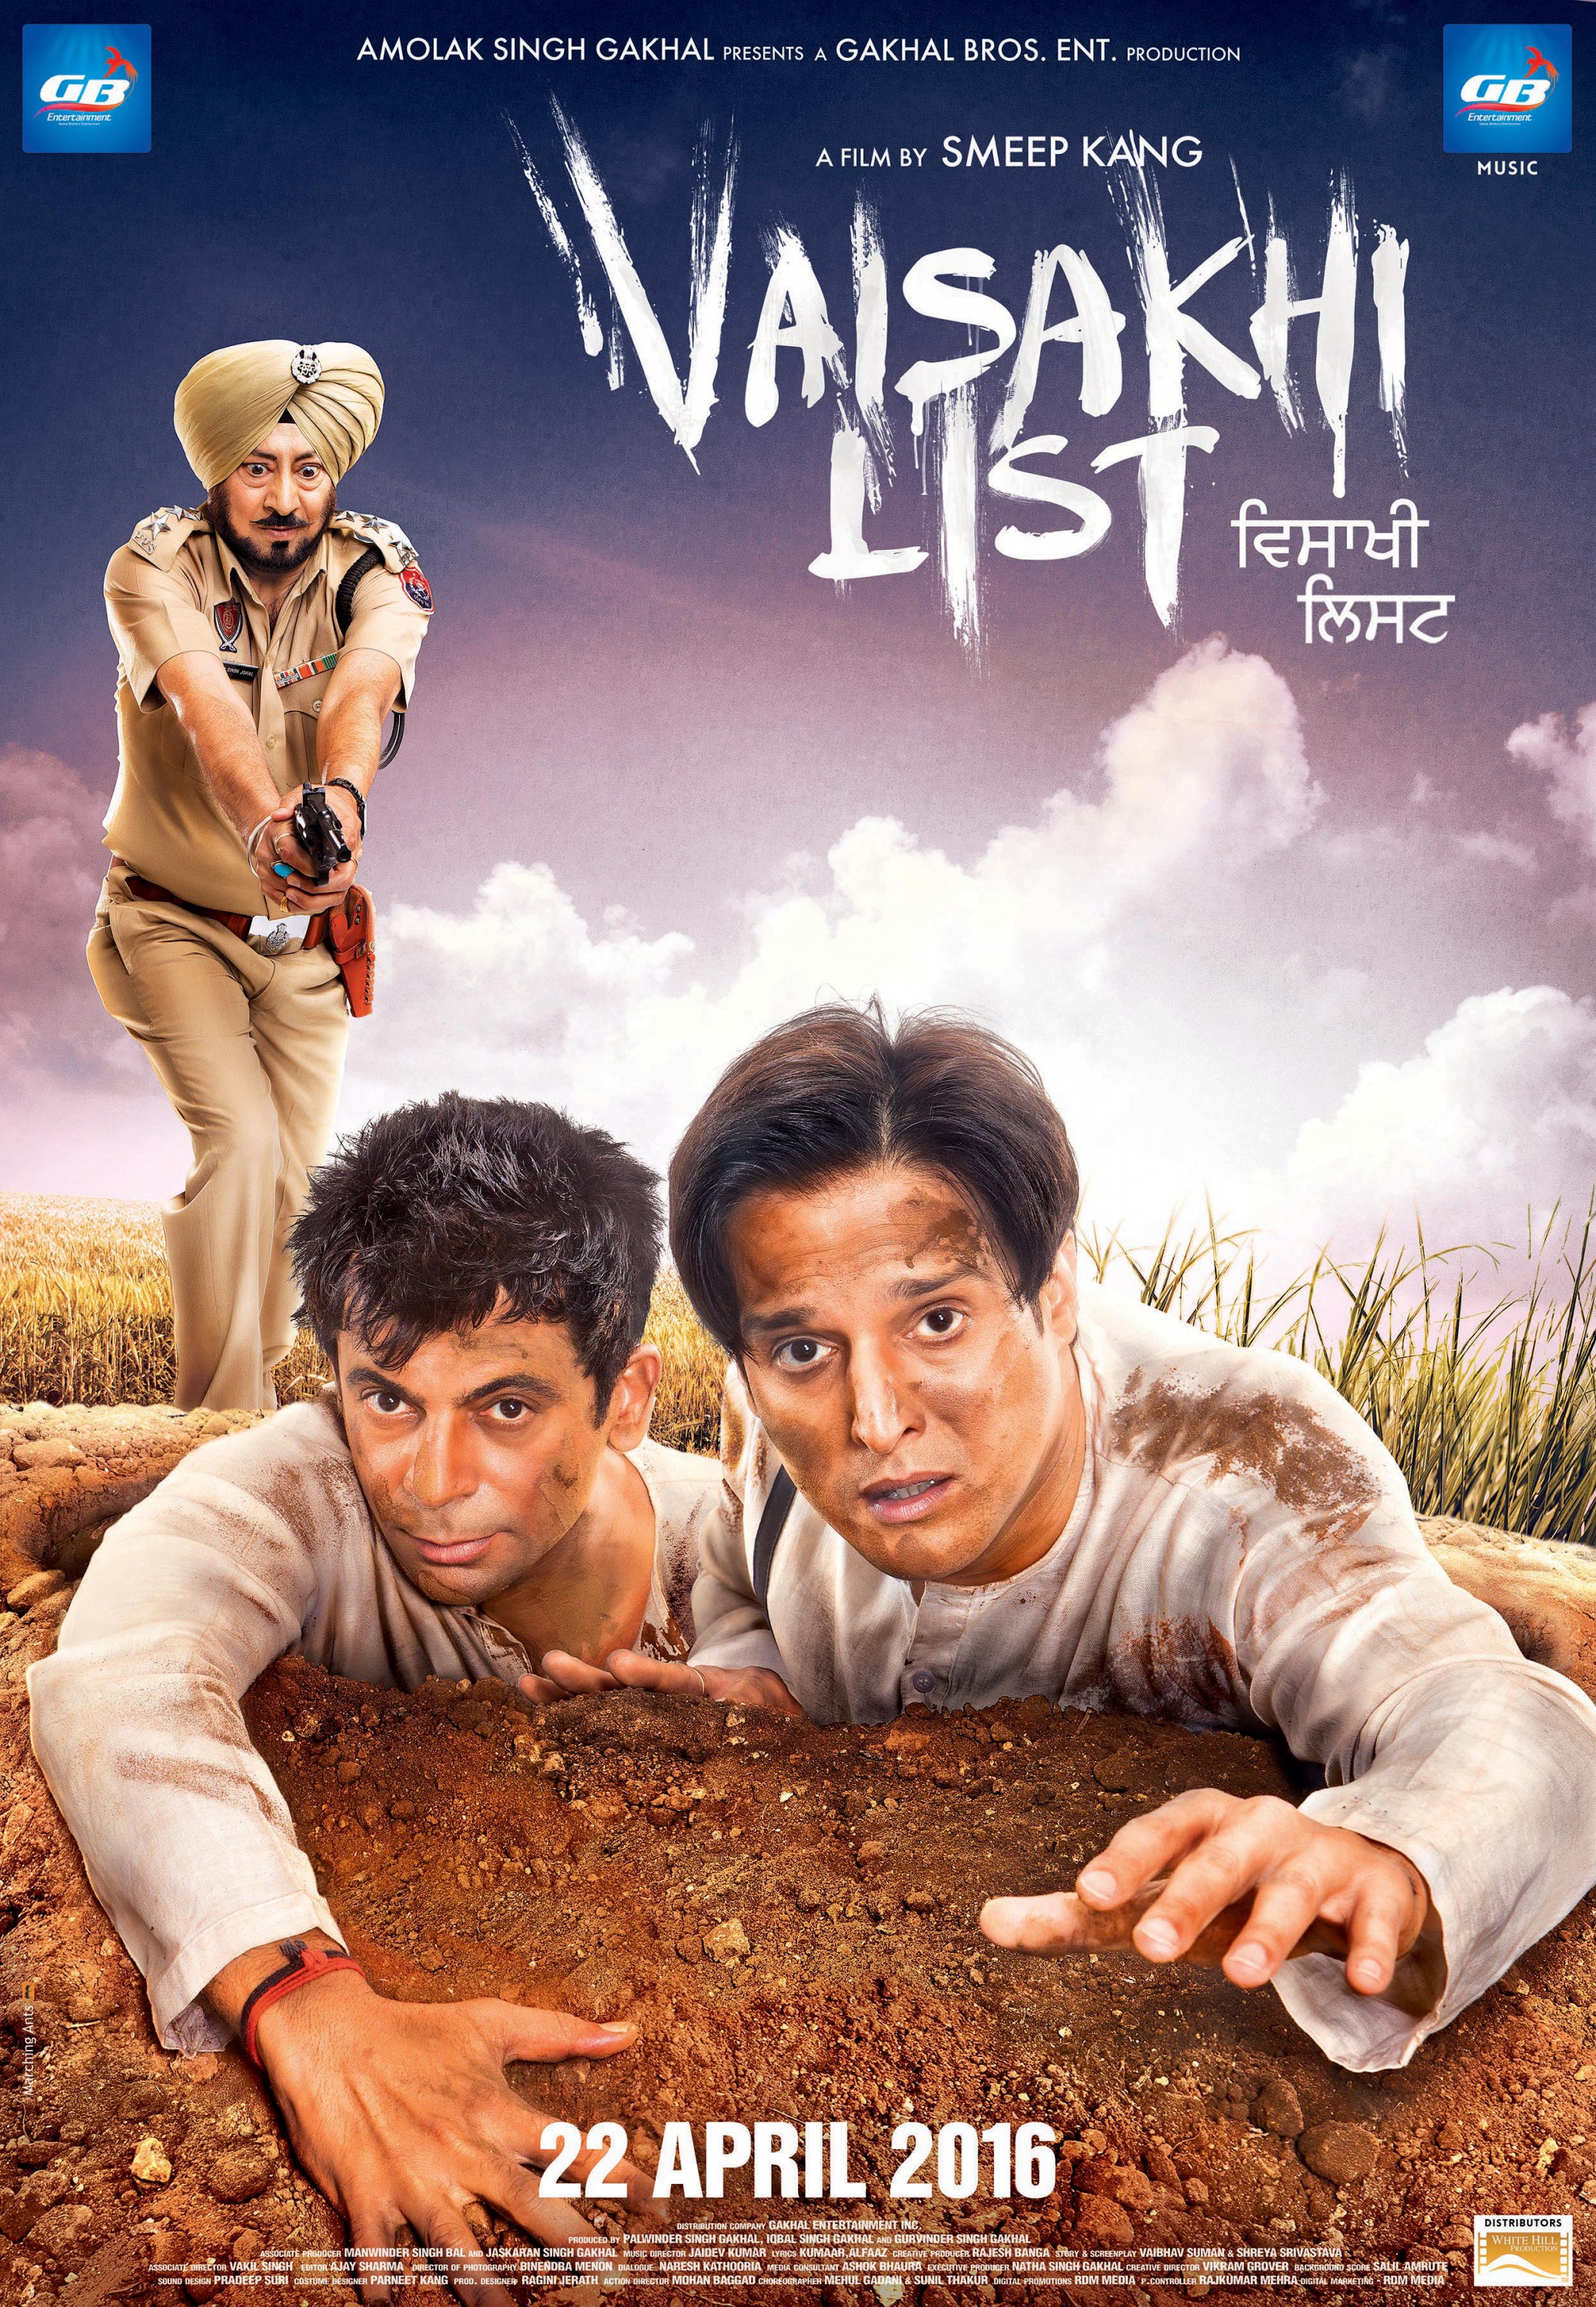 Mega Sized Movie Poster Image for Vaisakhi List (#5 of 6)